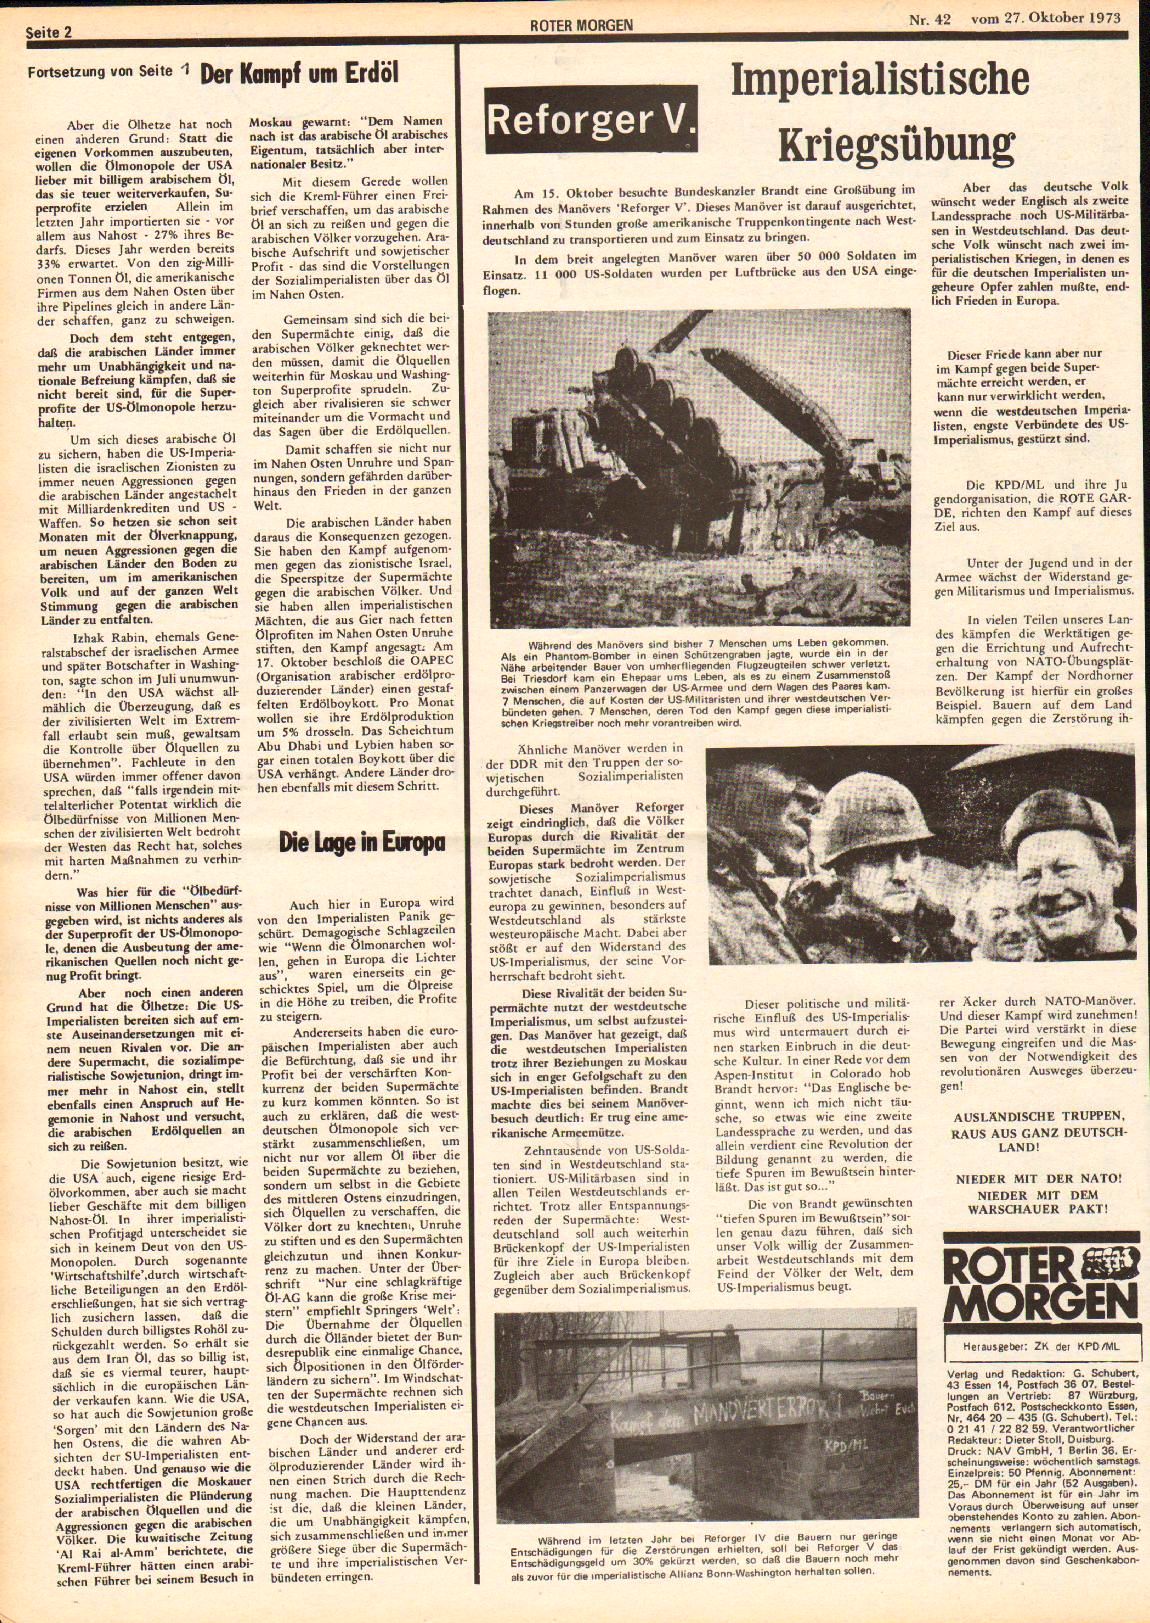 Roter Morgen, 7. Jg., 27. Oktober 1973, Nr. 42, Seite 2